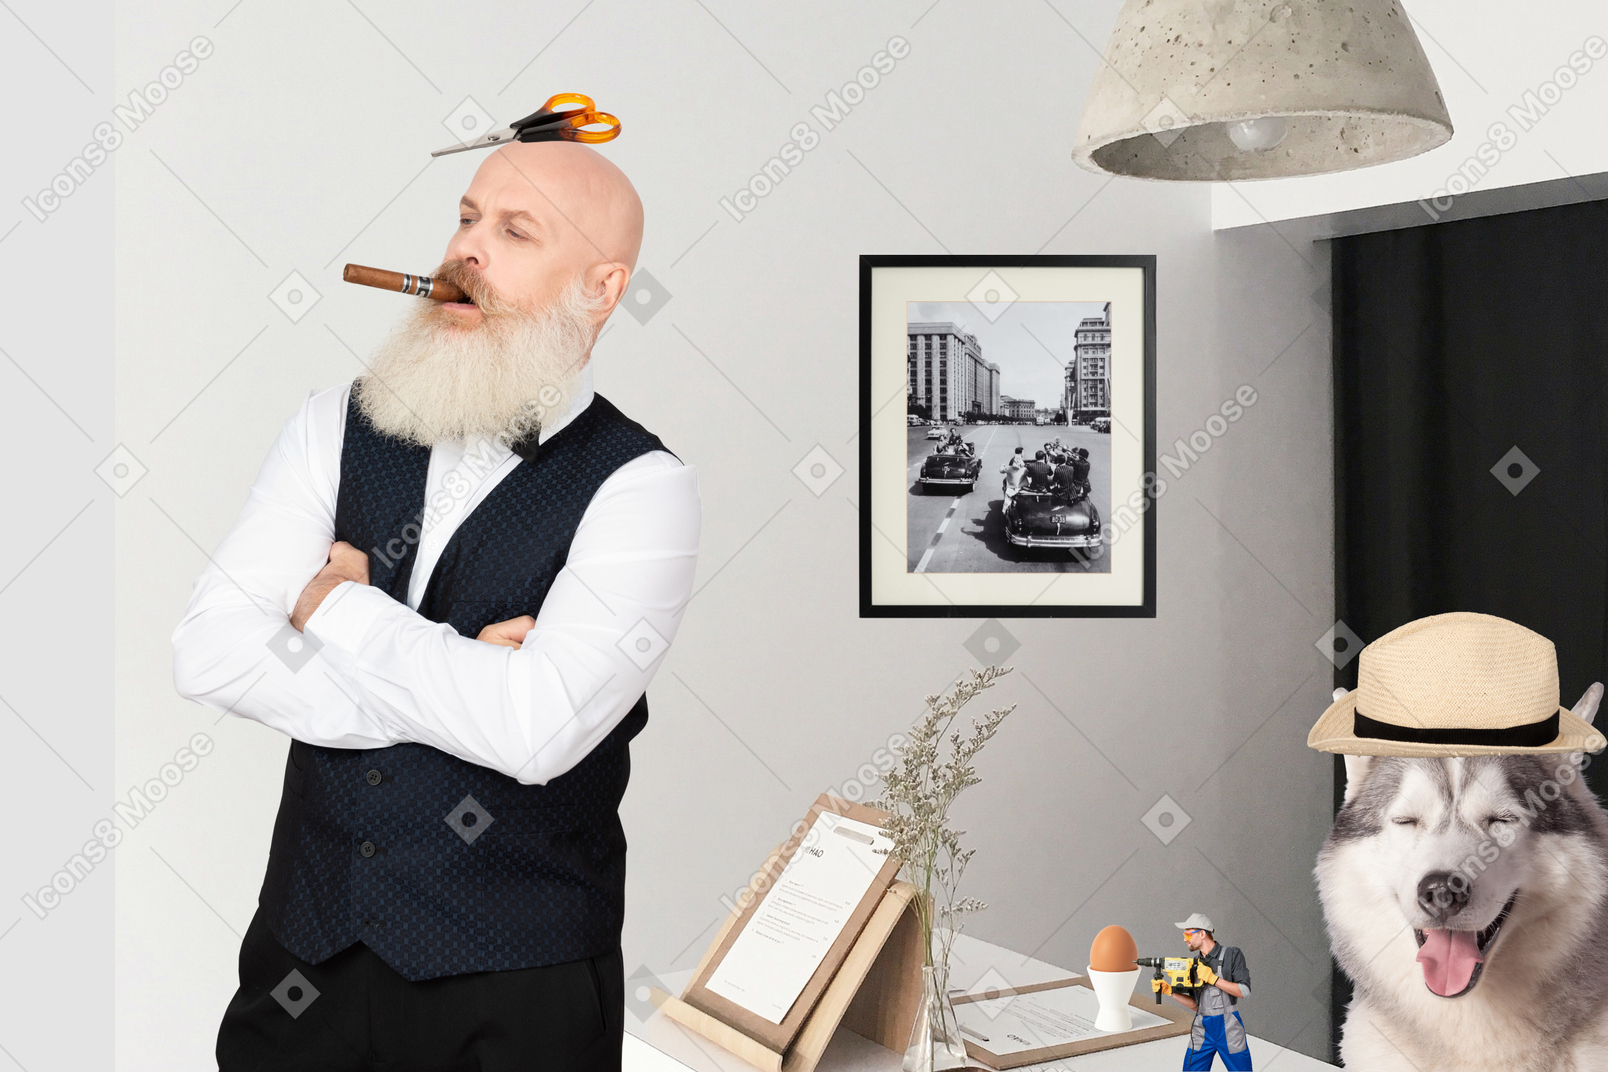 A man smoking a cigarette next to a dog